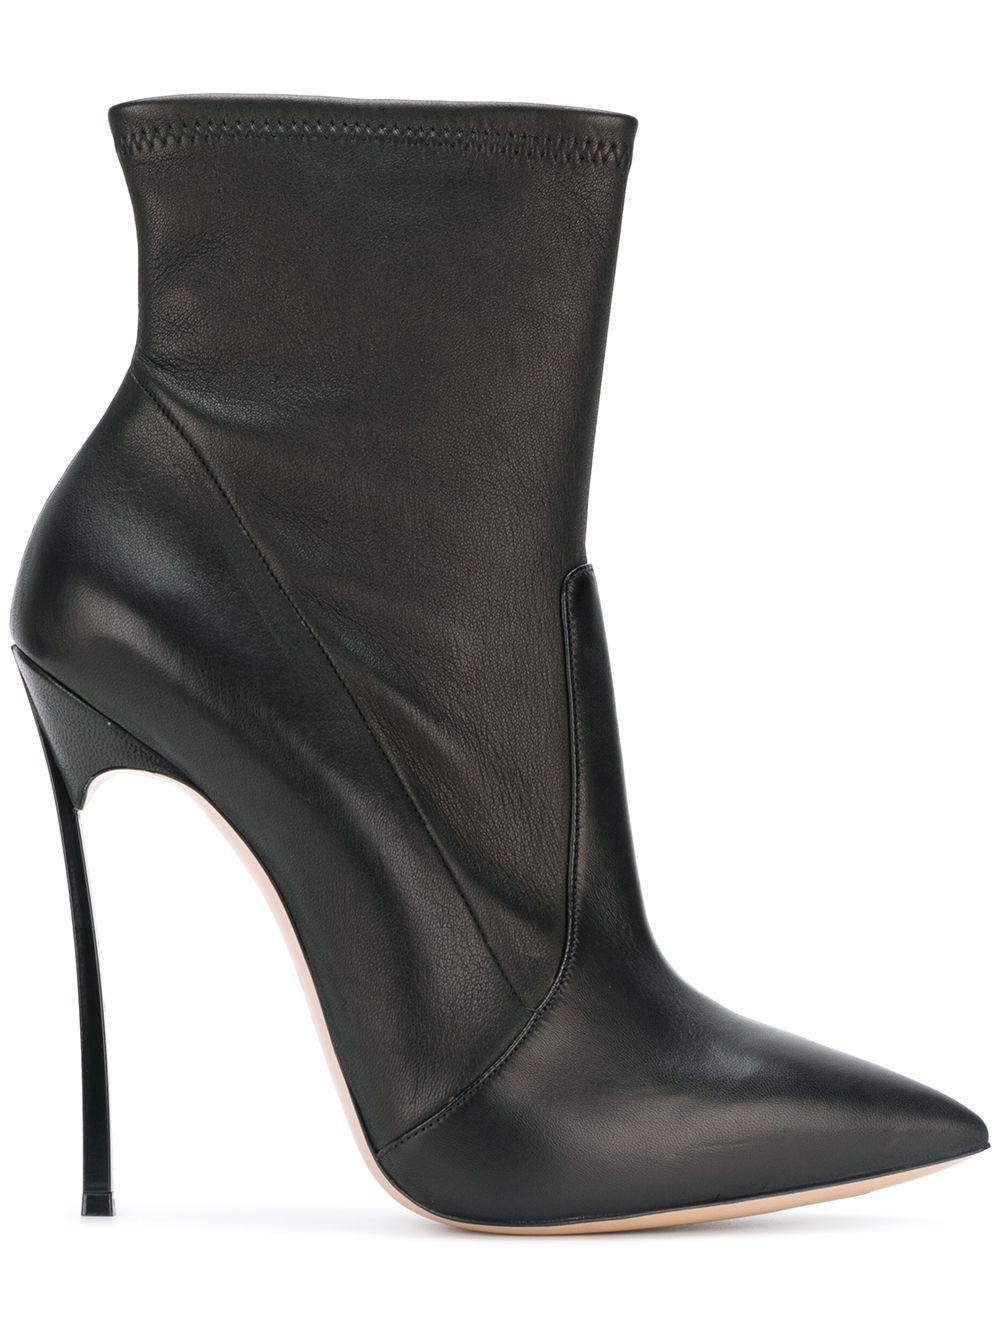 Casadei Blade Ankle Boots | ModeSens